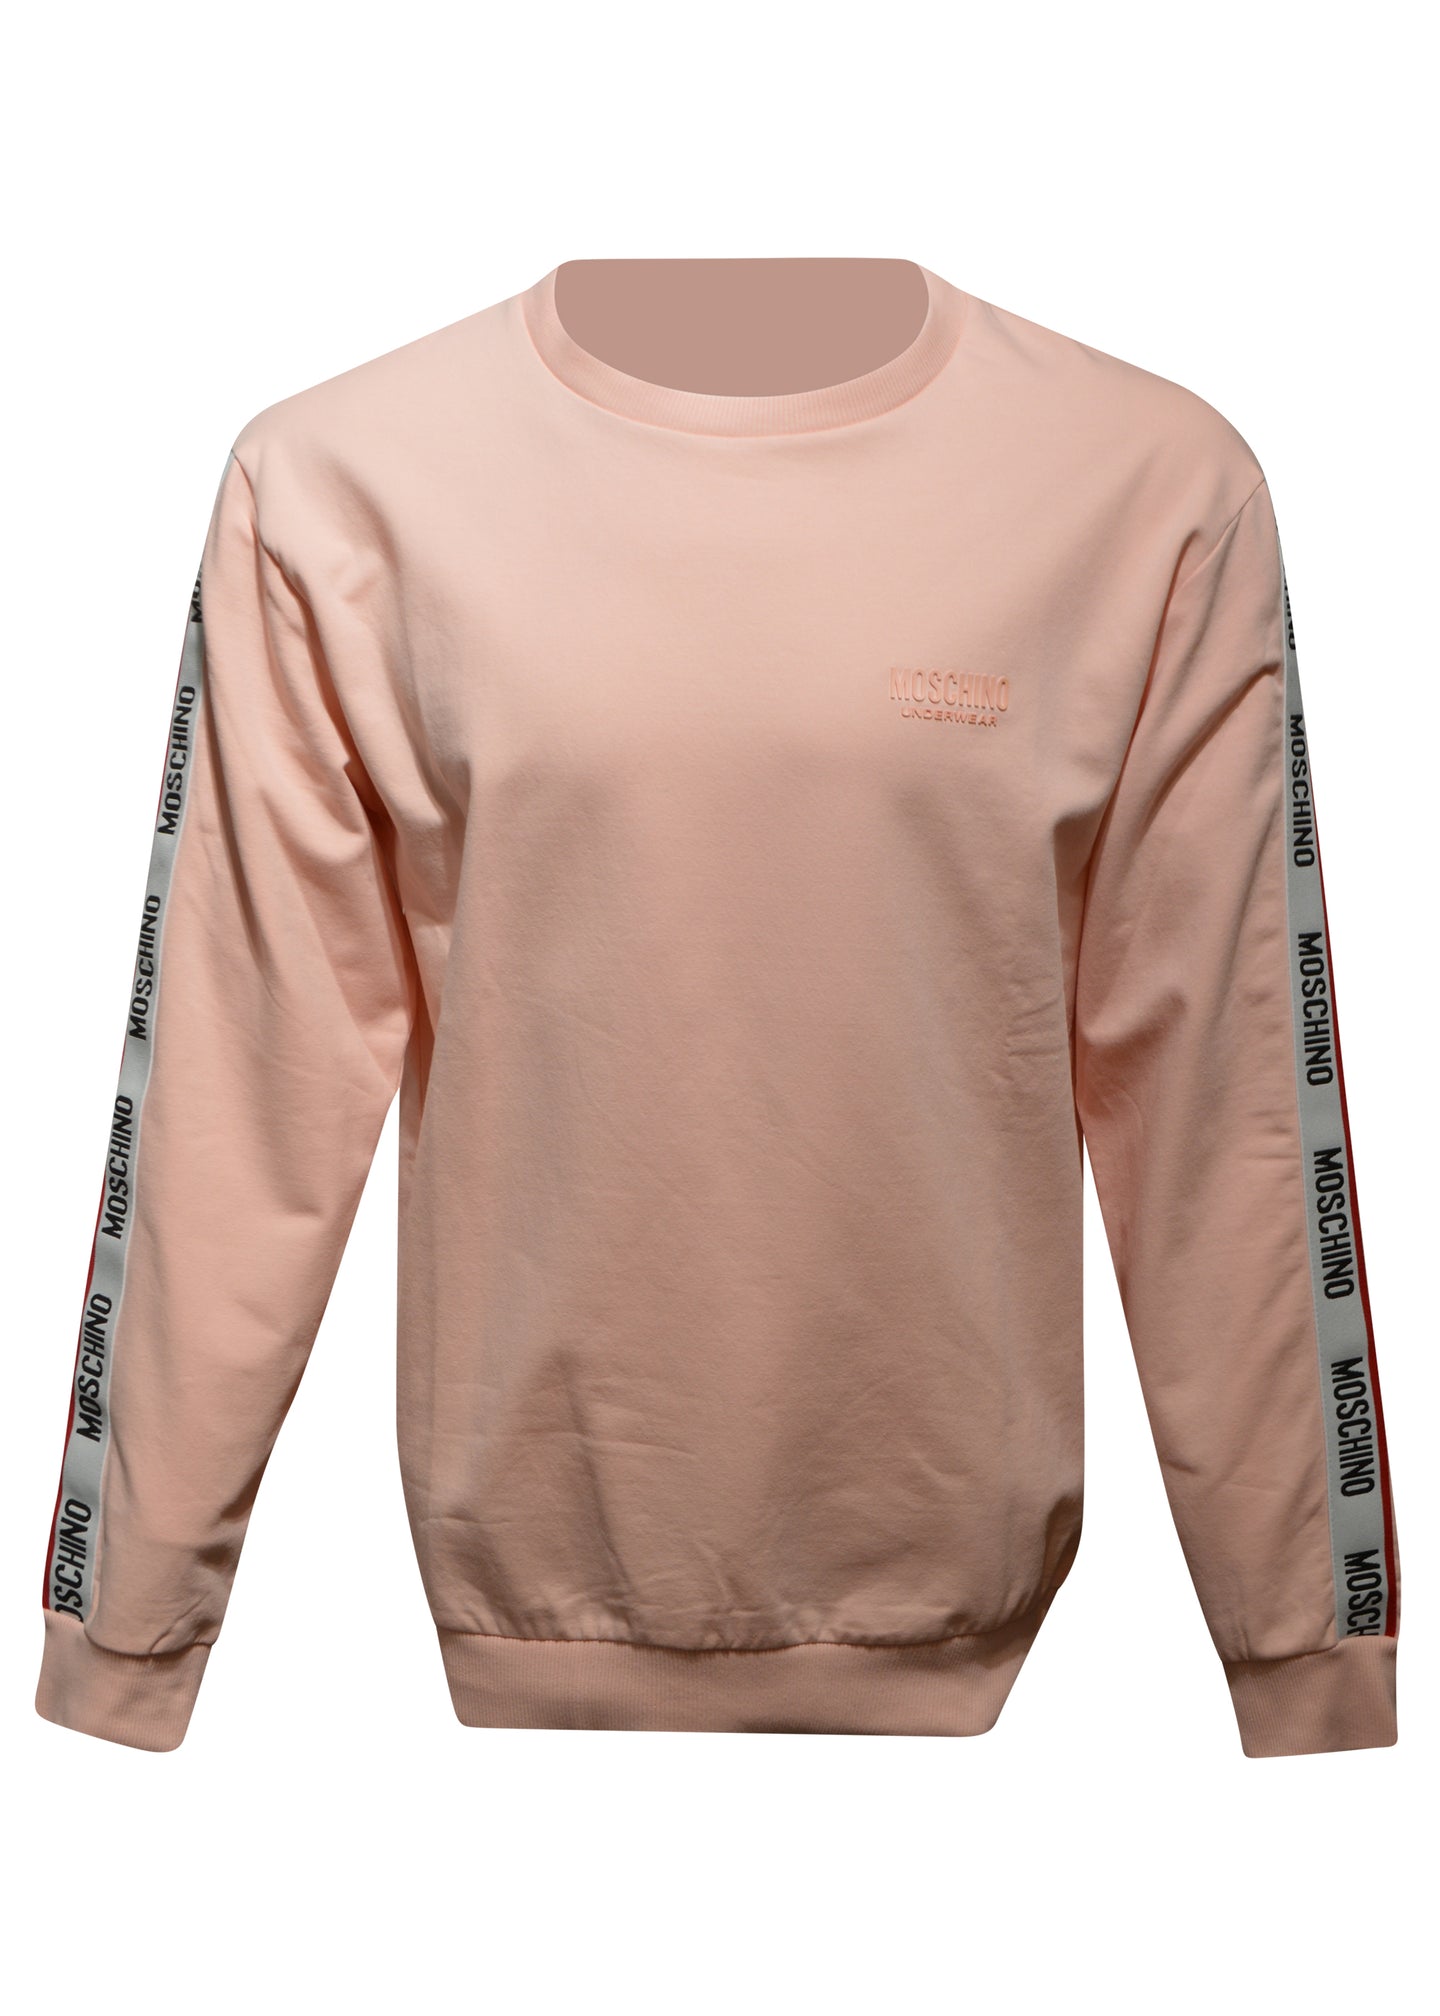 Moschino - Crewneck Tape Sleeve Detail Sweatshirt - 400121 - Pink